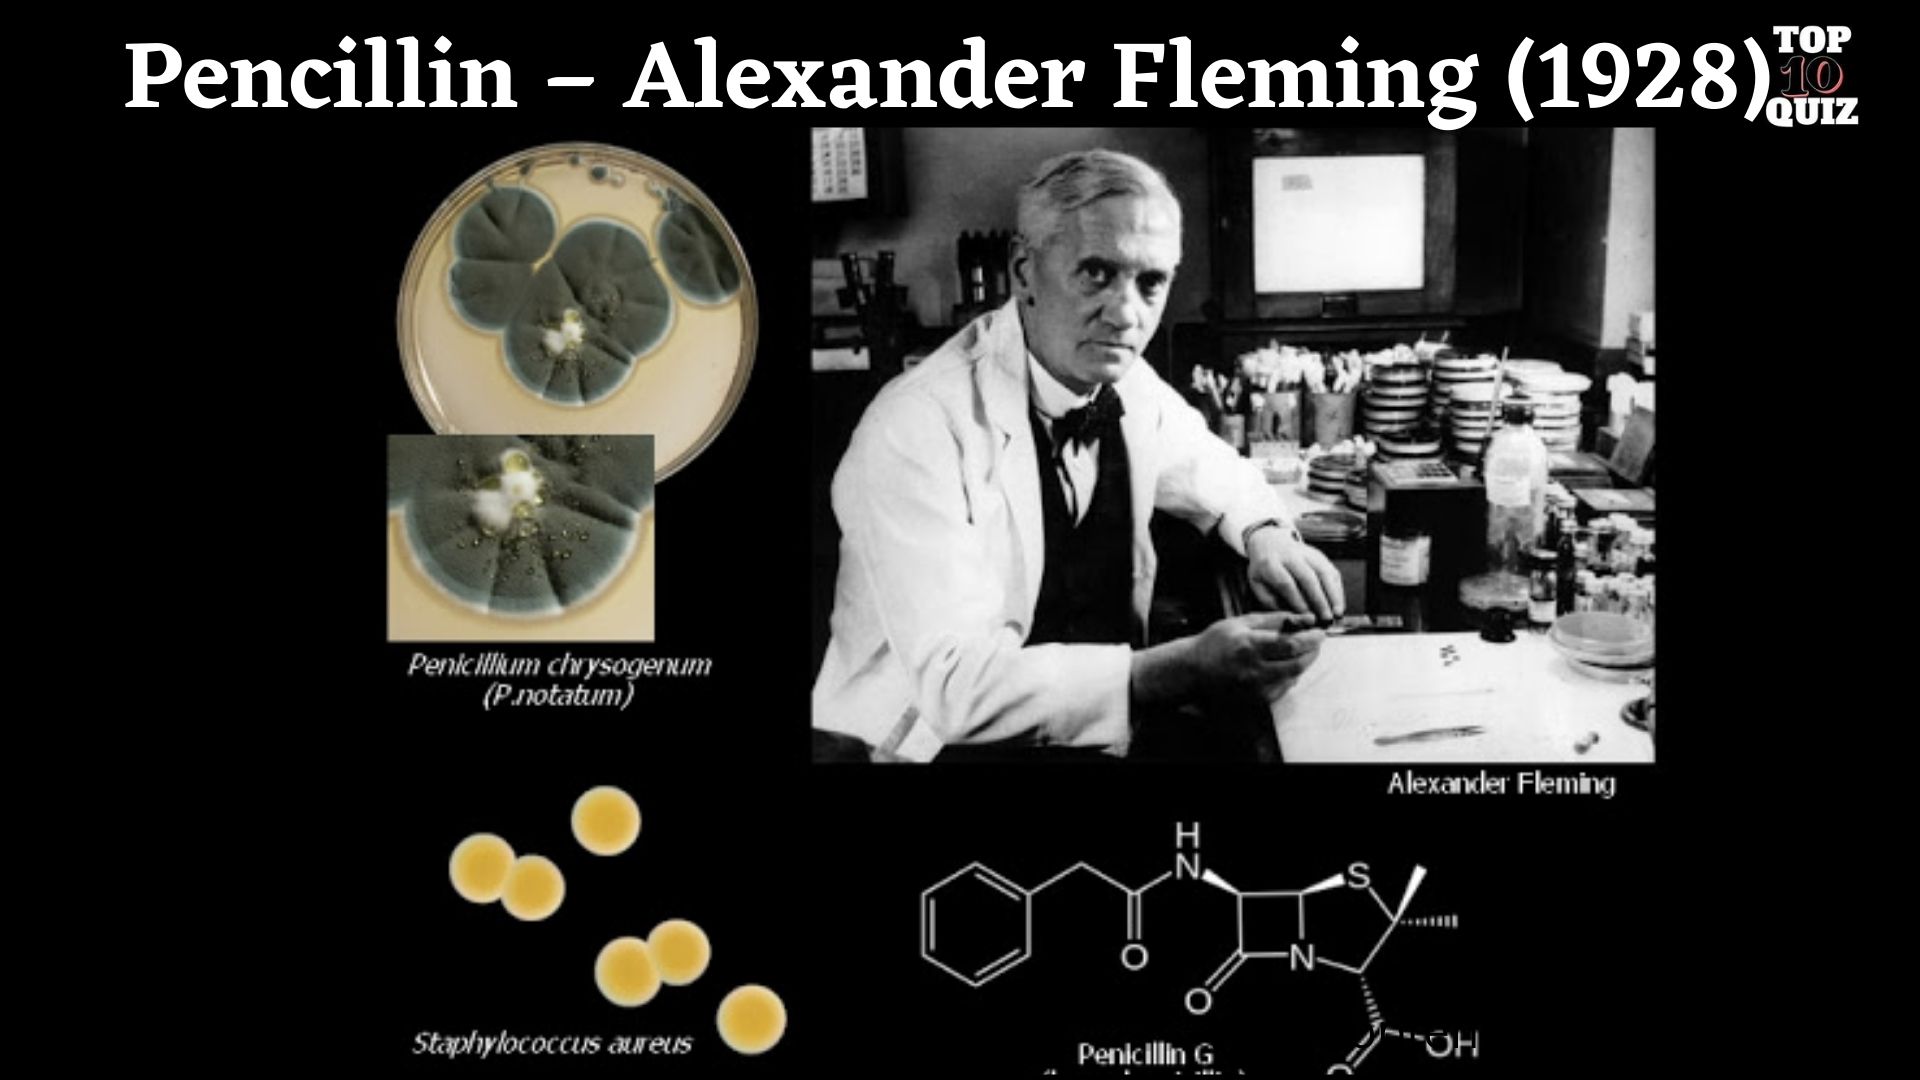 Alexander fleming discovered penicillin